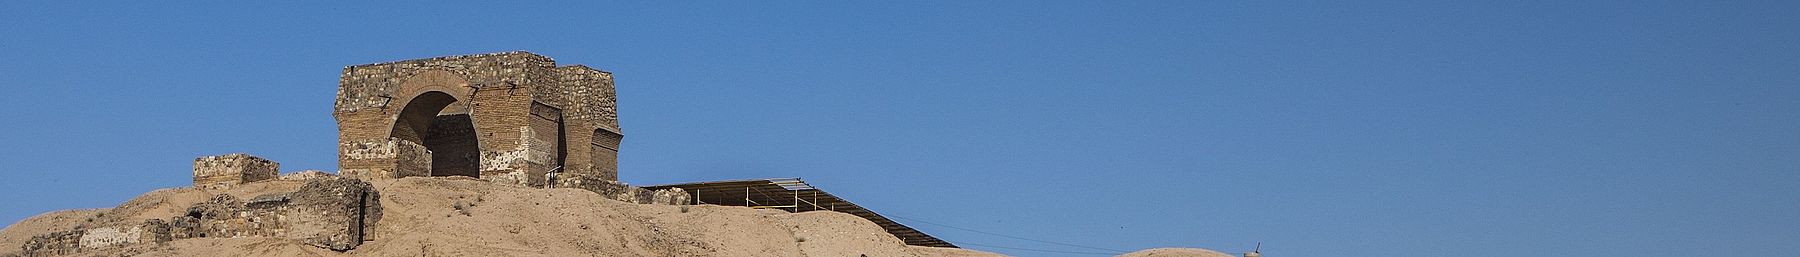 WV banner Tehran Province Tappeh Mill temple in Varamin.jpg